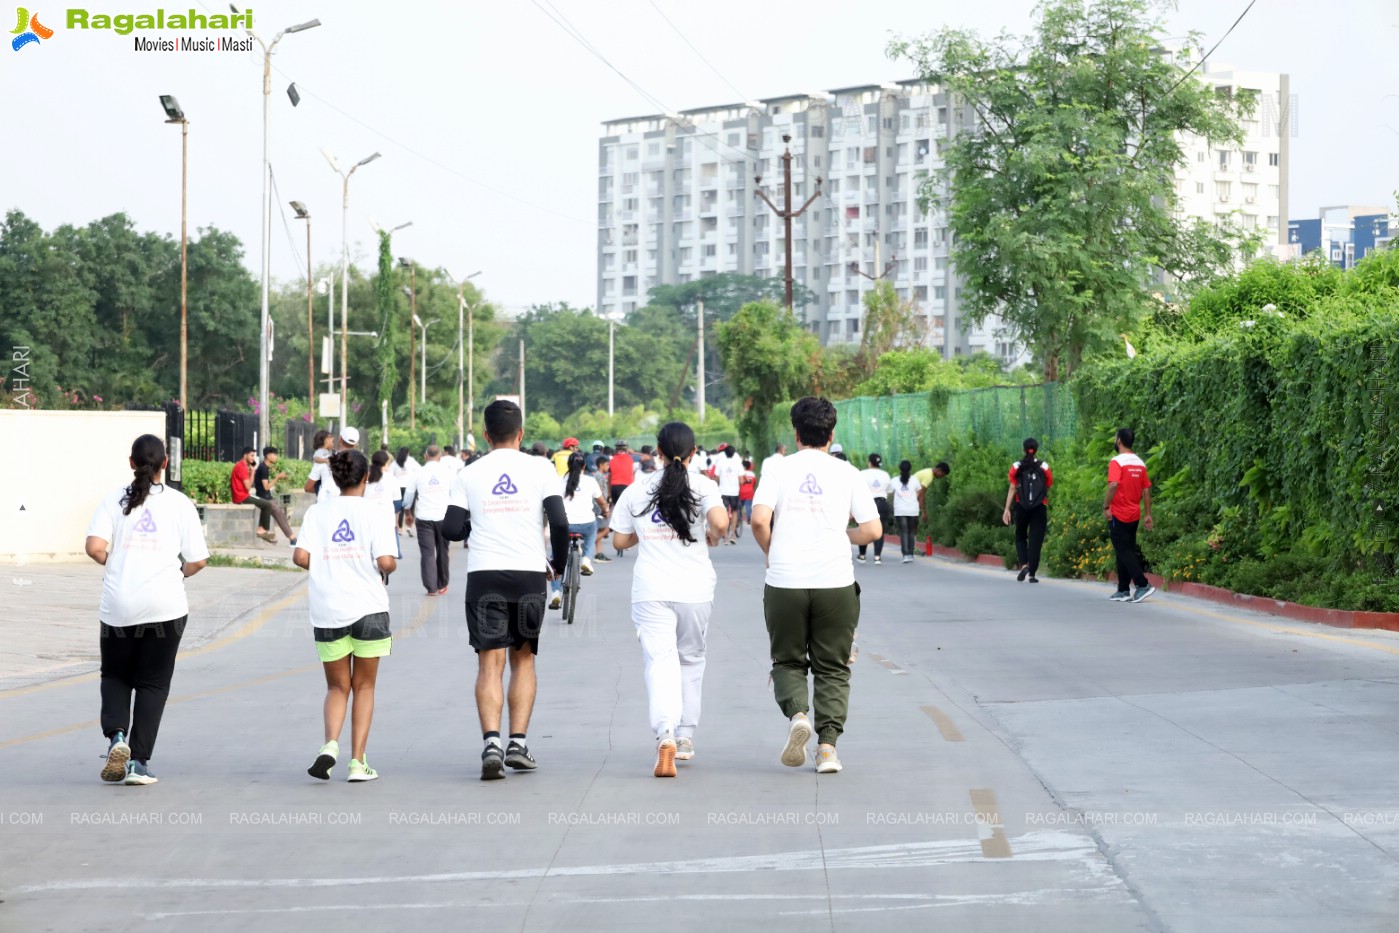 Society for Emergency medicine India- 5K, 10K Marathon and Cyclathon10k at Thrill City